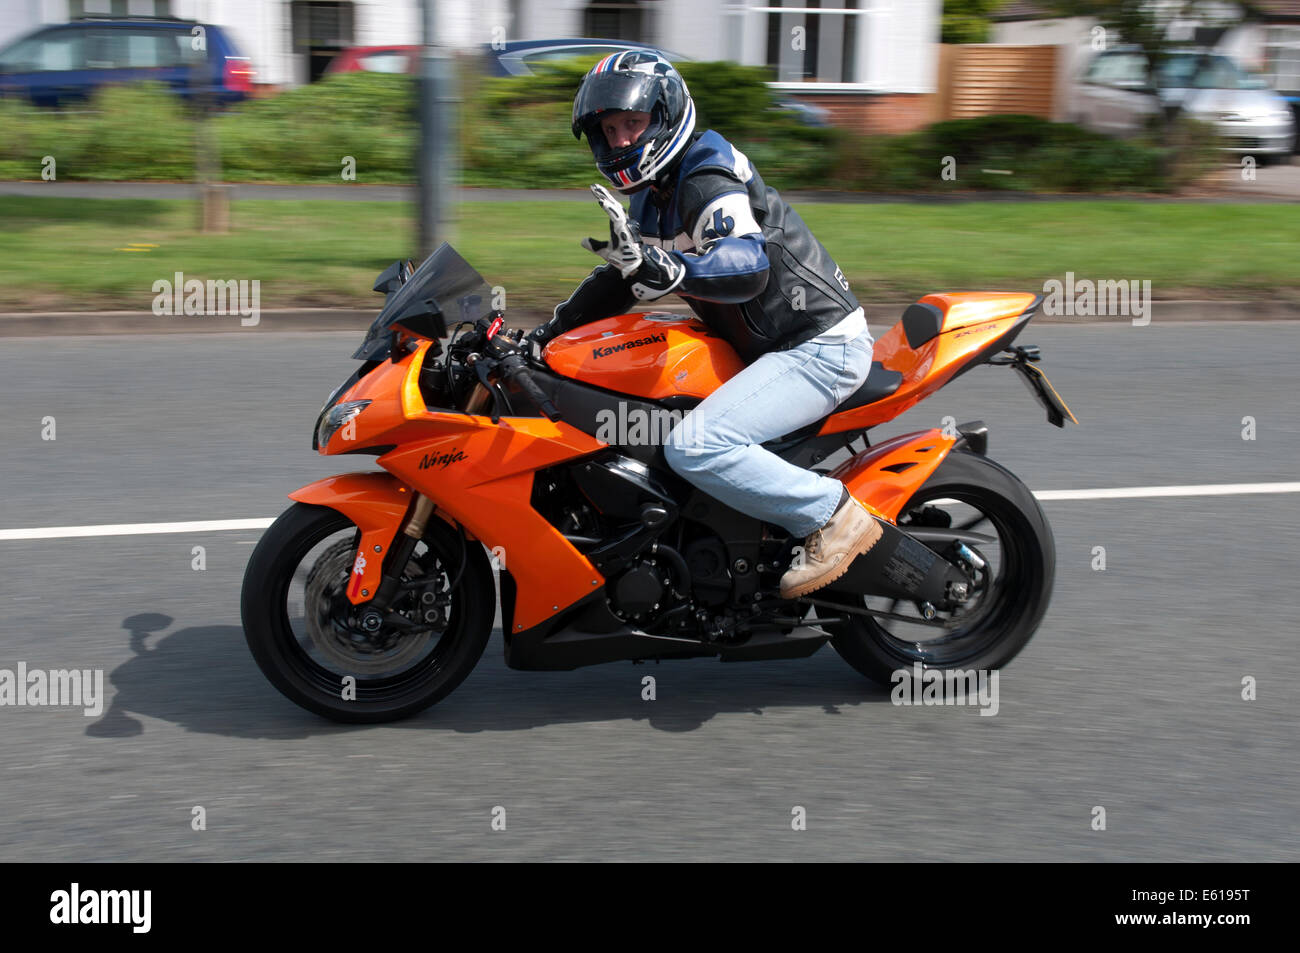 Kawasaki Ninja ZX 10R motorcycle Stock Photo